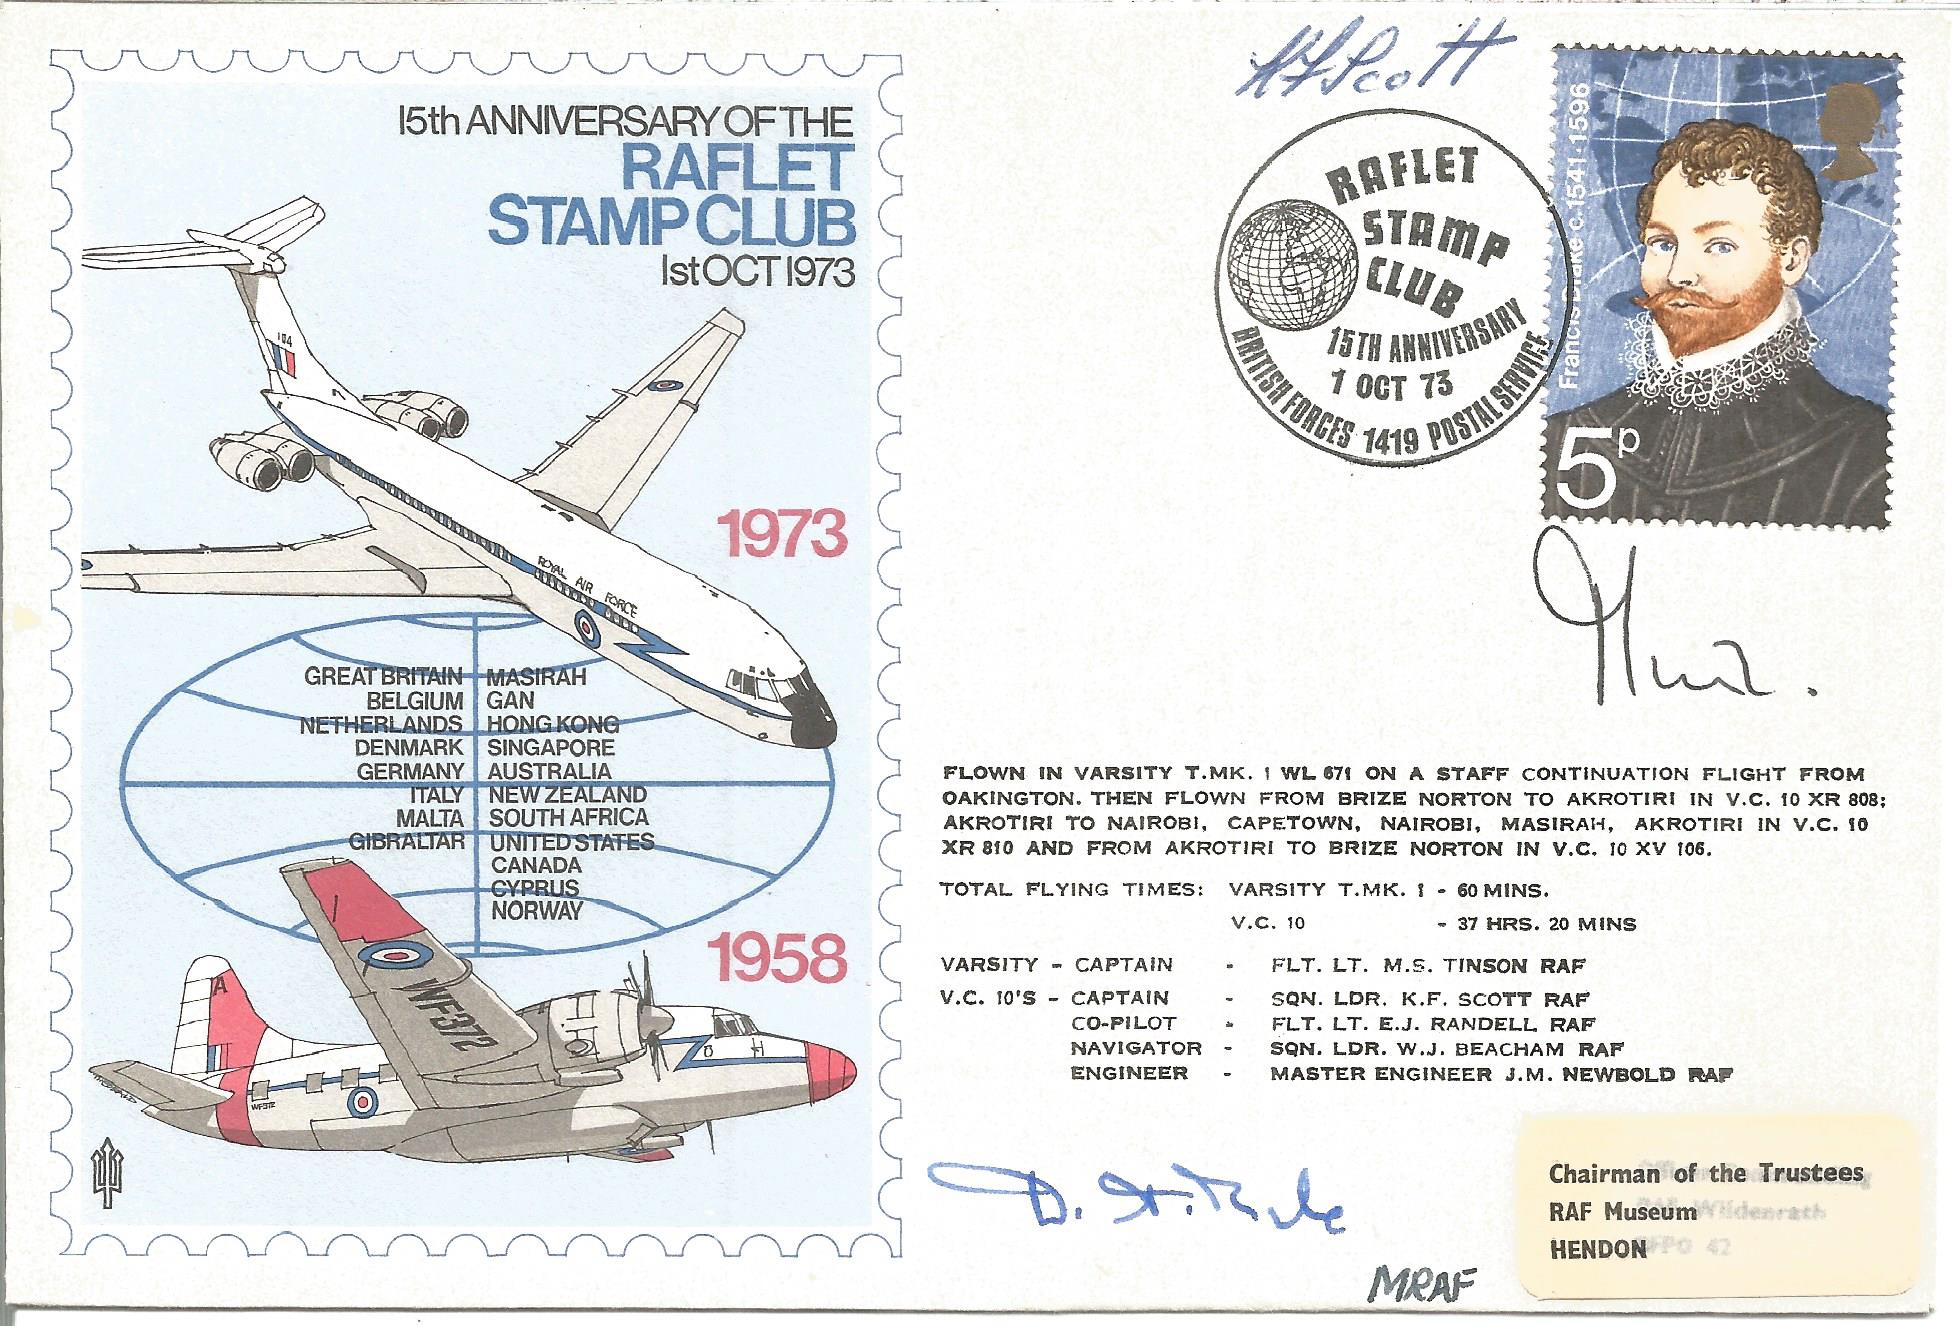 WW2 Fighter ace MRAF Dermot Boyle AFC Battle of Britain signed RAF Raflet Stamp Club cover. All